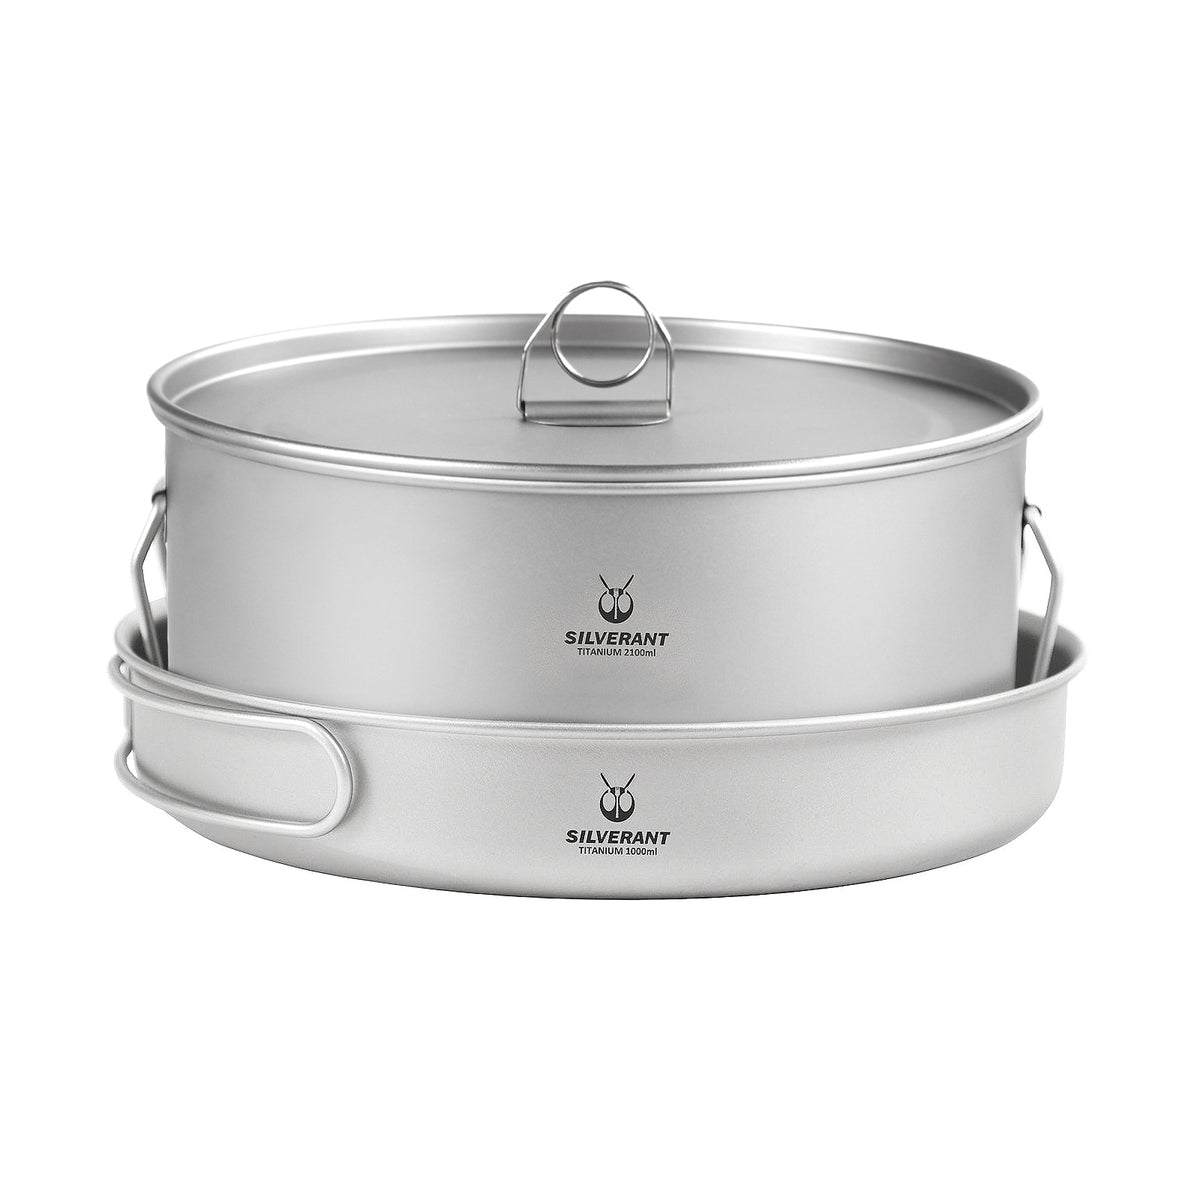 Camping Pot Frying Pan And Cookware Titanium Metal Stock Photo - Download  Image Now - iStock